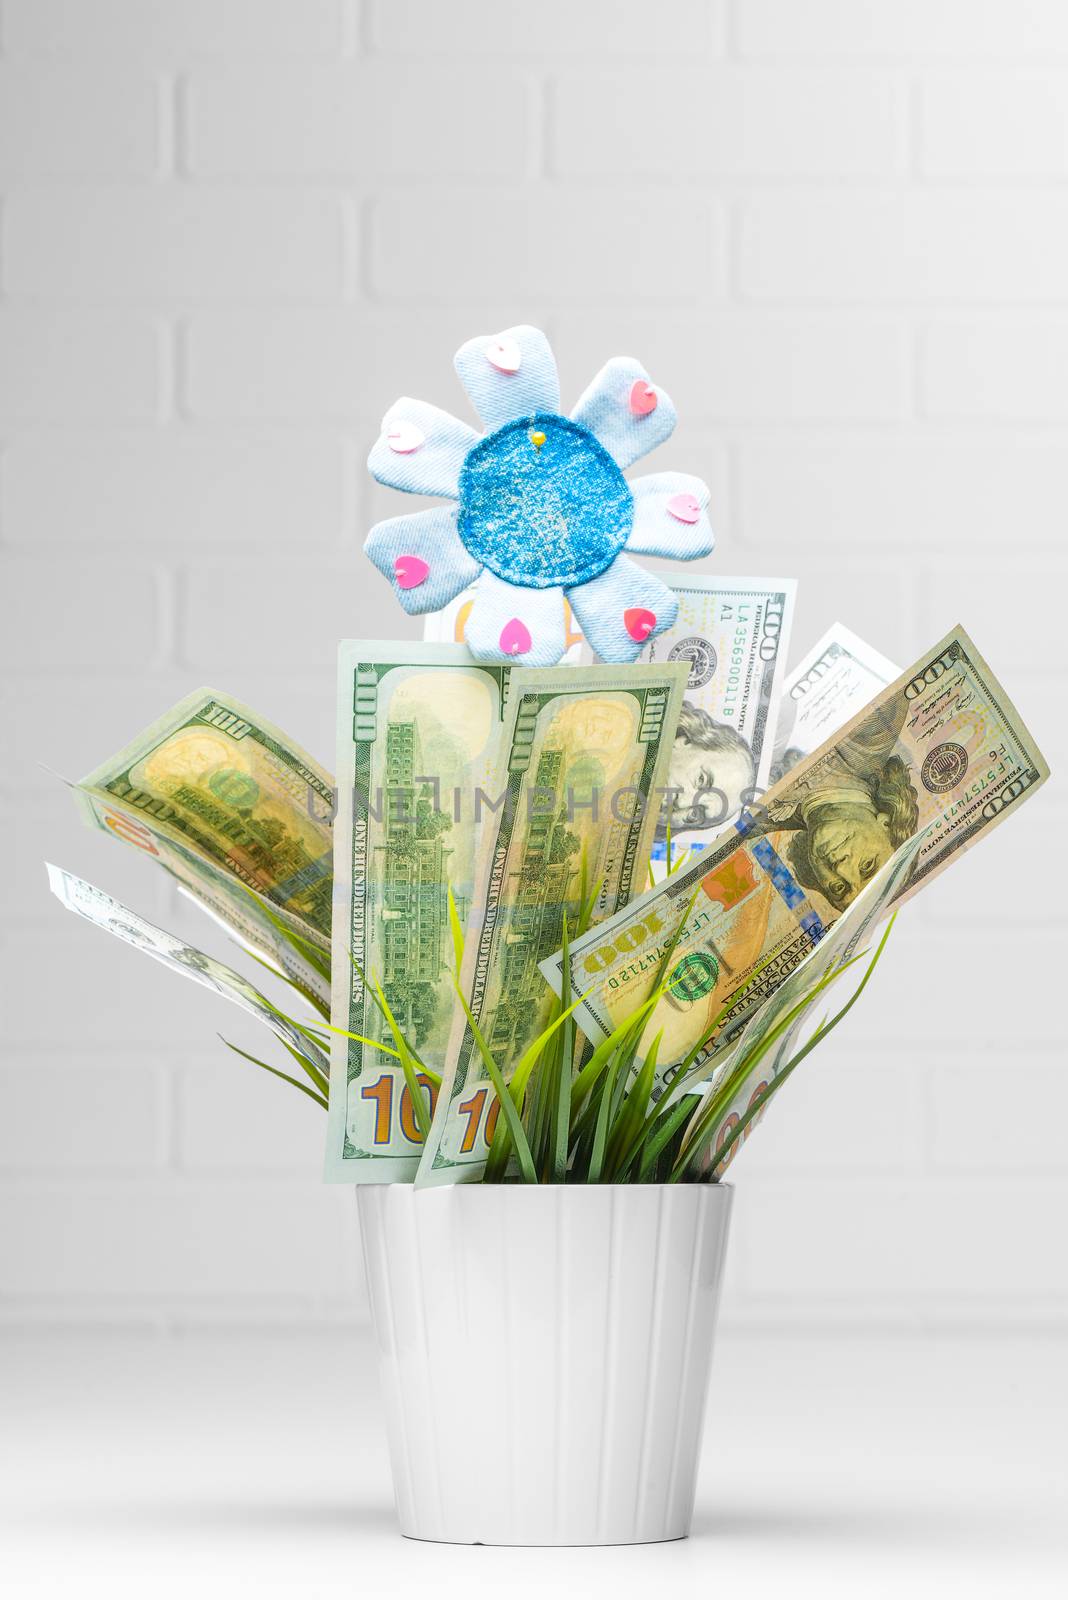 Financial growth. Money Growing in Flower Pot